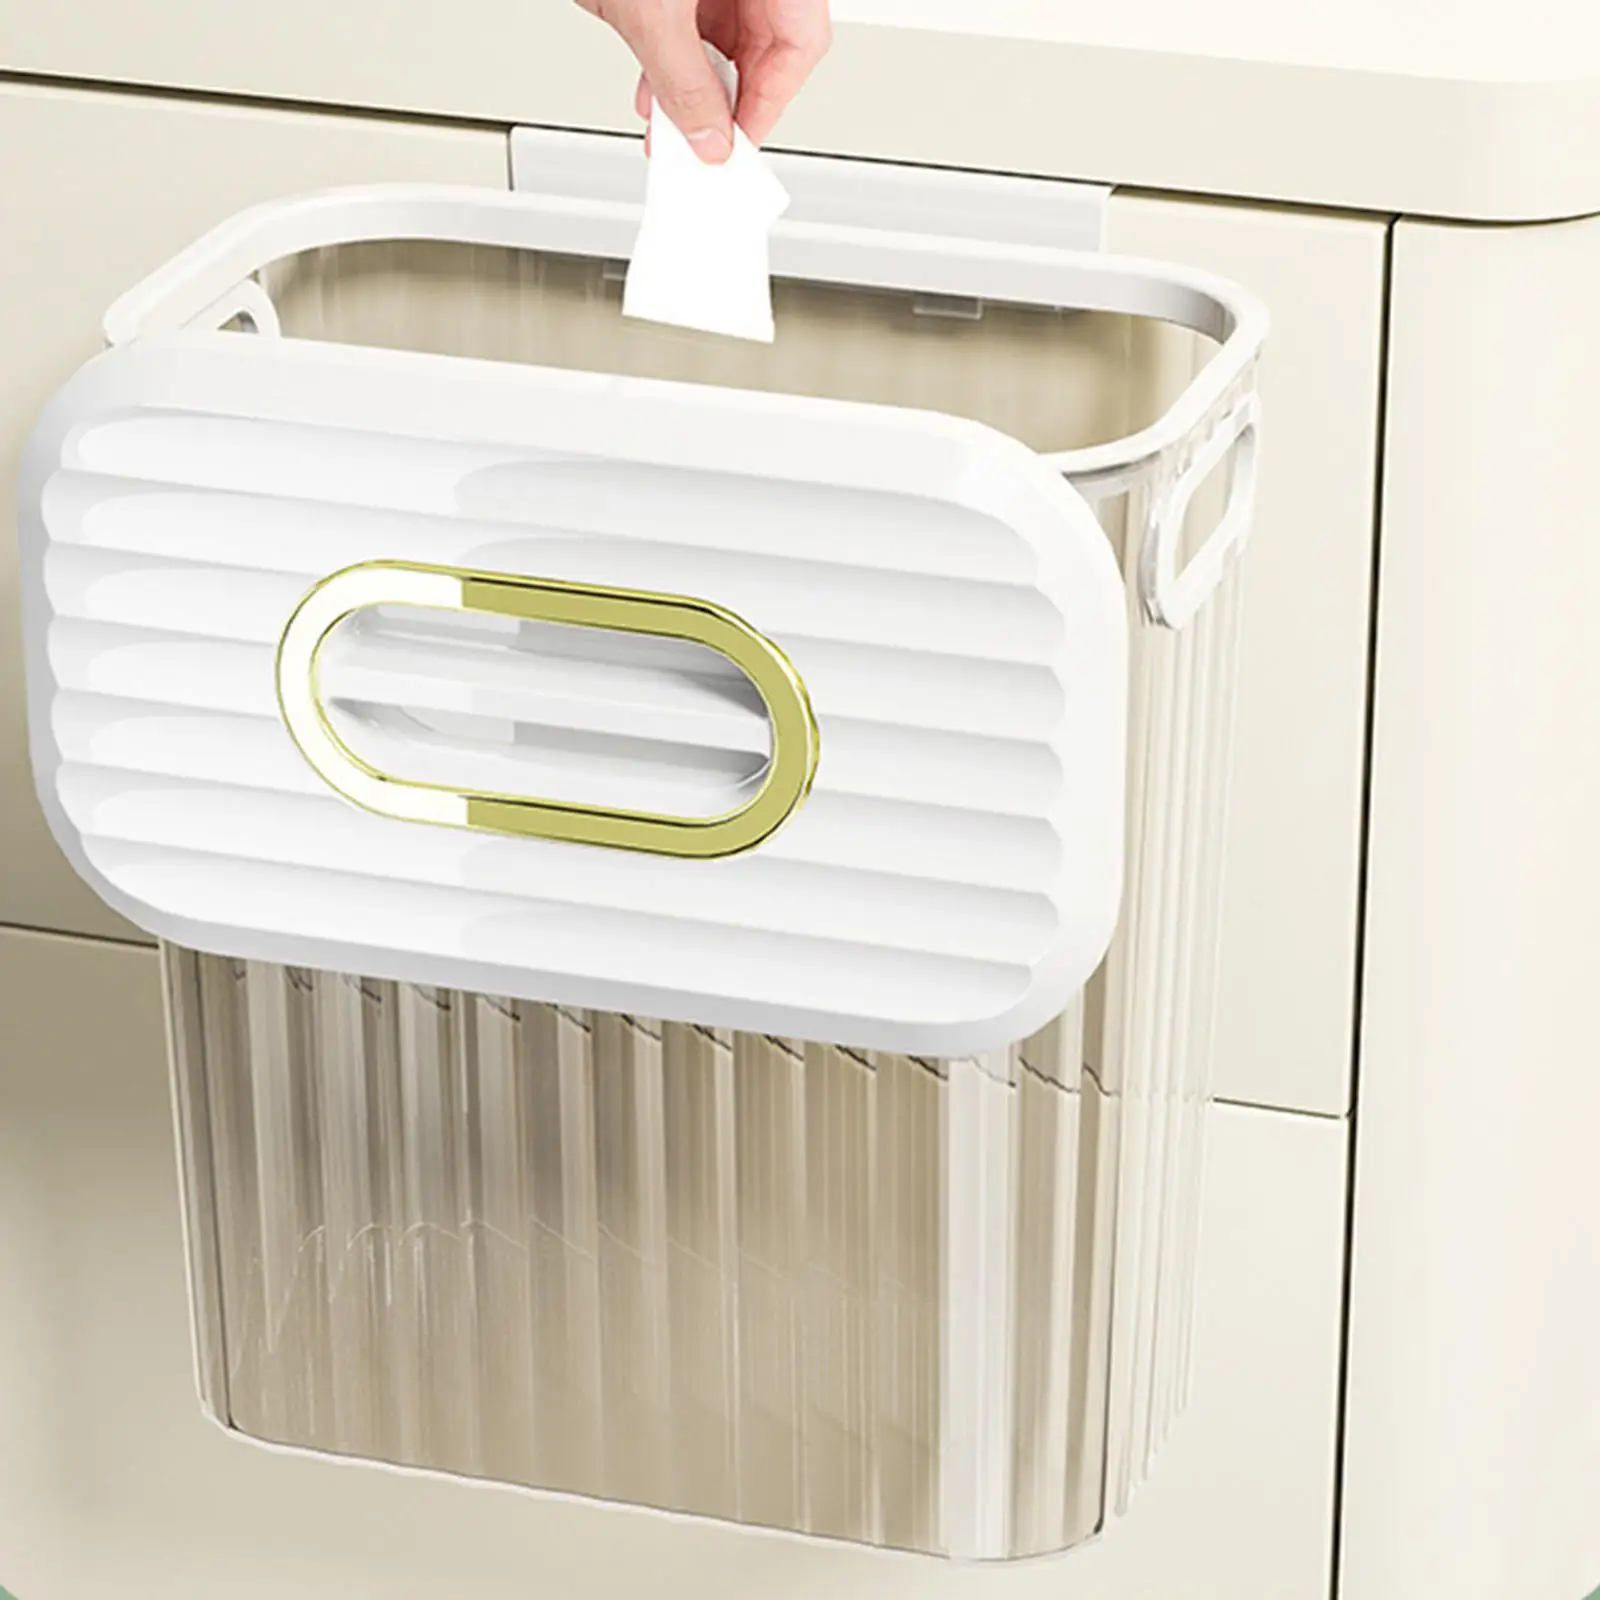 Kitchen Hanging Trash Can with Lid Compost Bin Indoor Durable Portable for Door Countertop